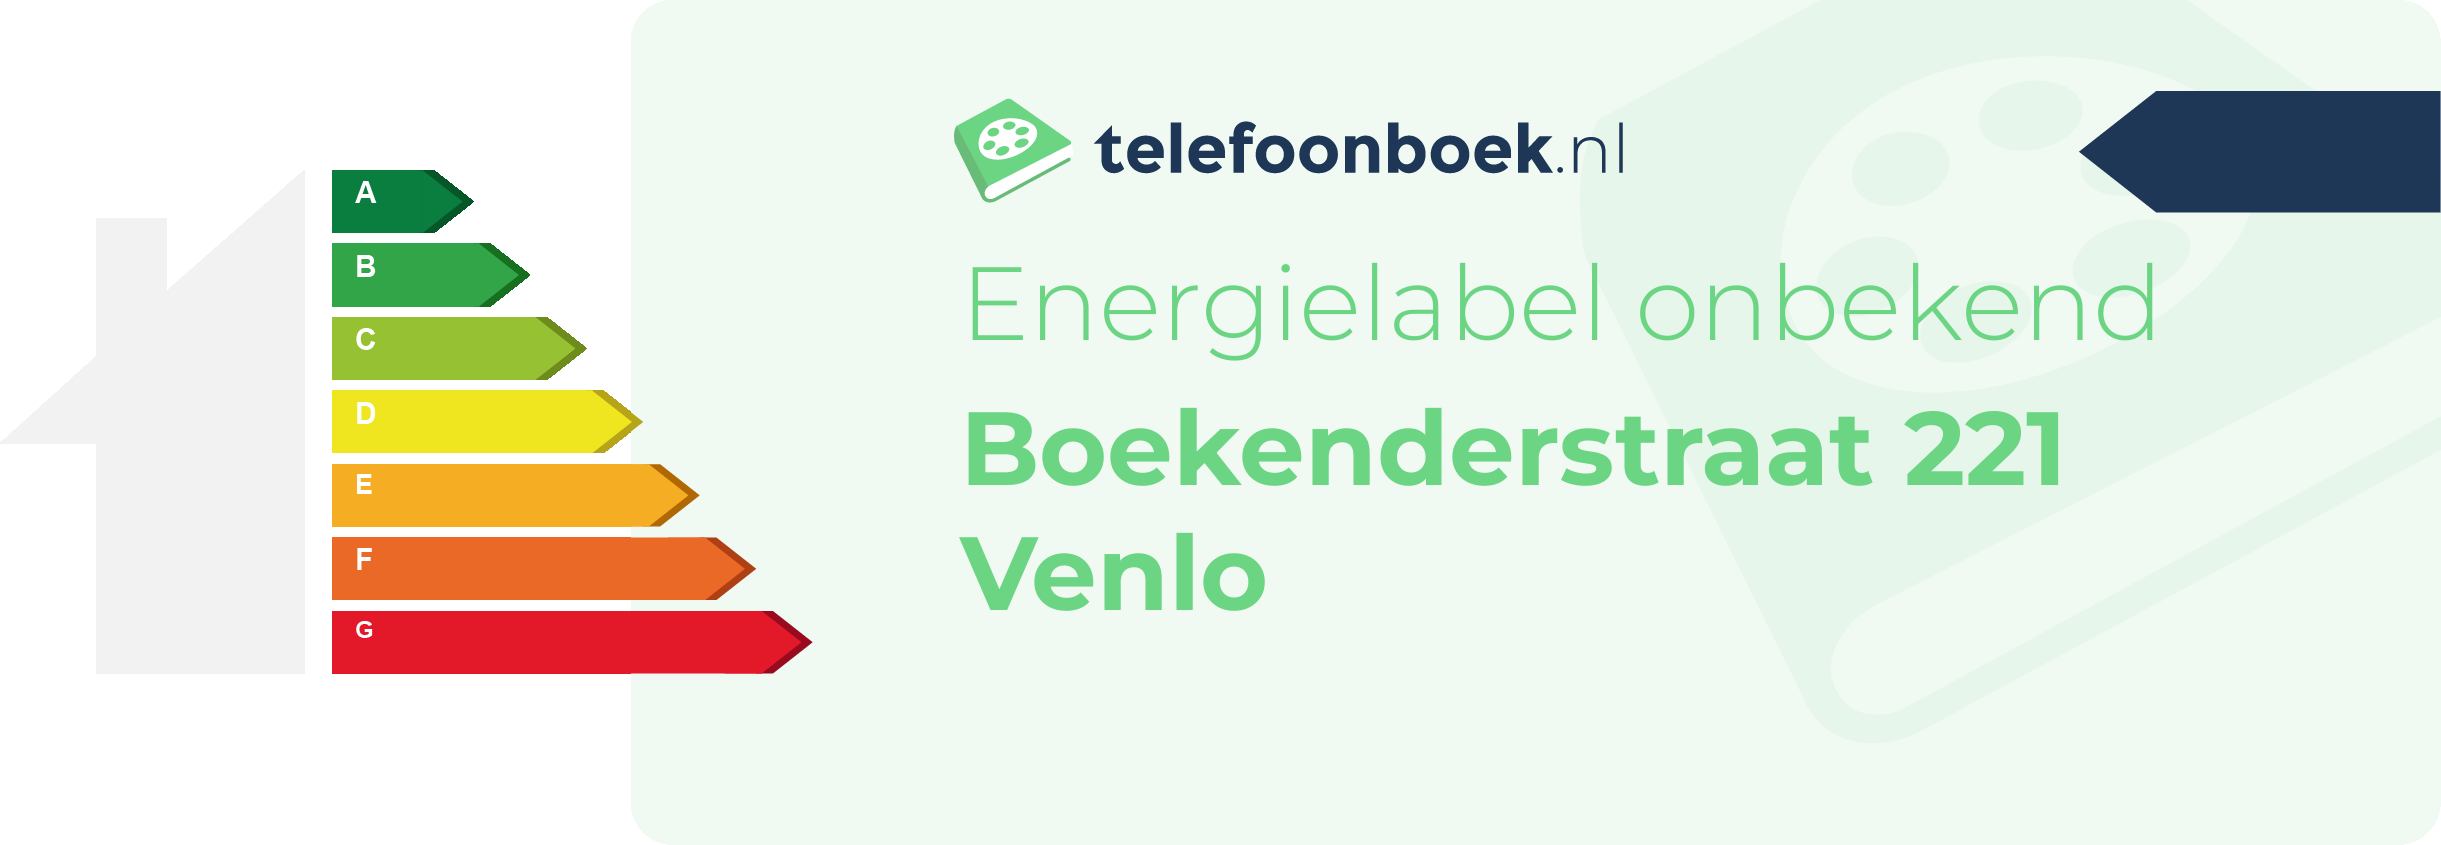 Energielabel Boekenderstraat 221 Venlo